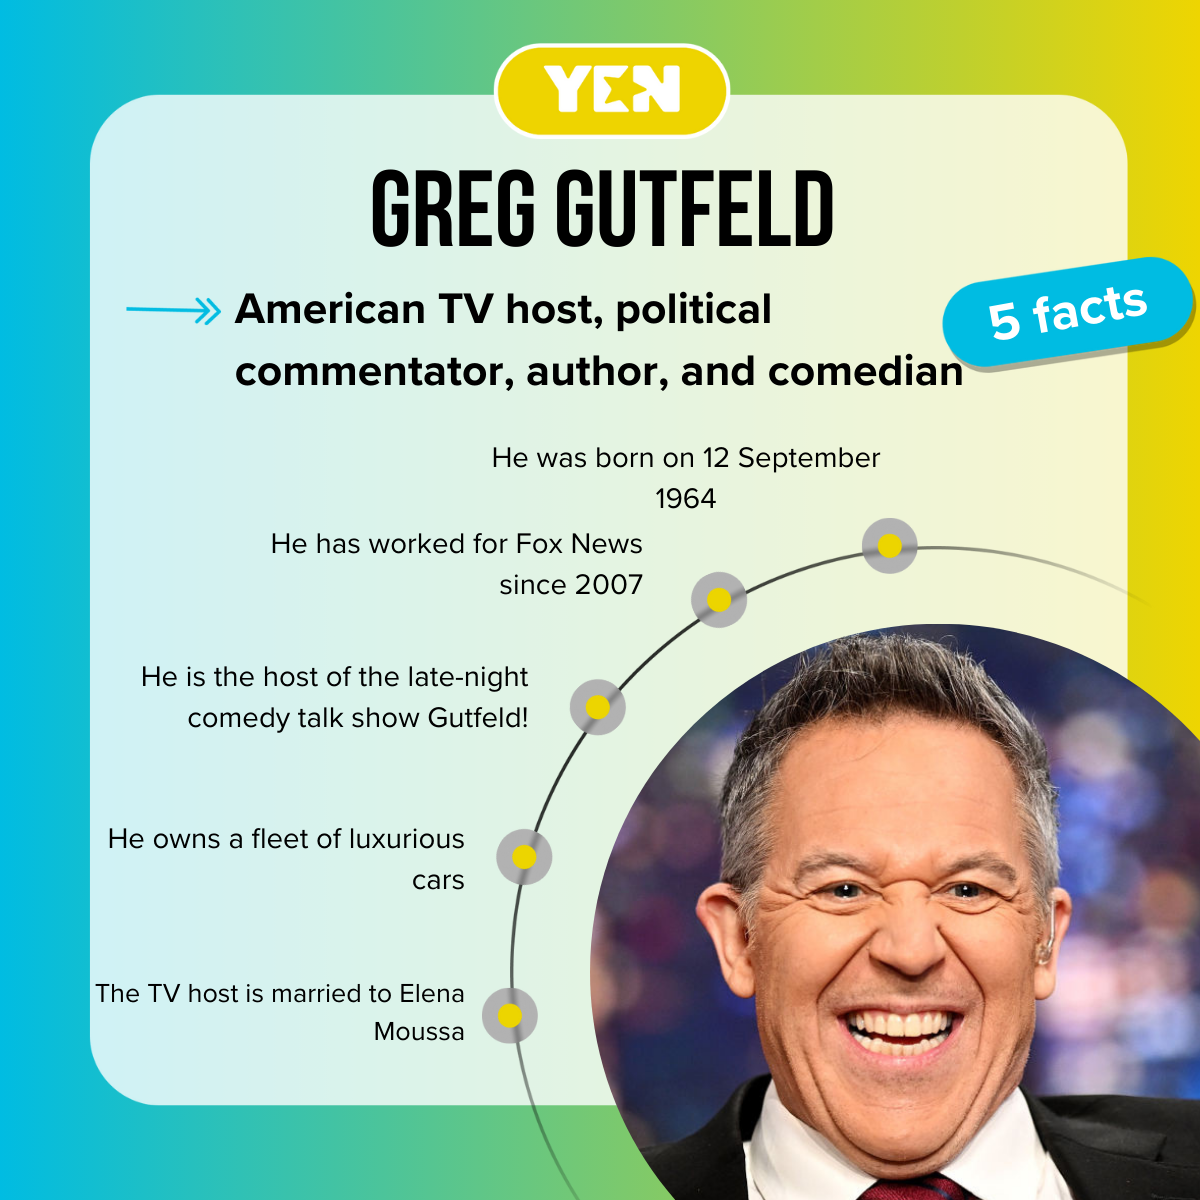 Facts about Greg Gutfeld